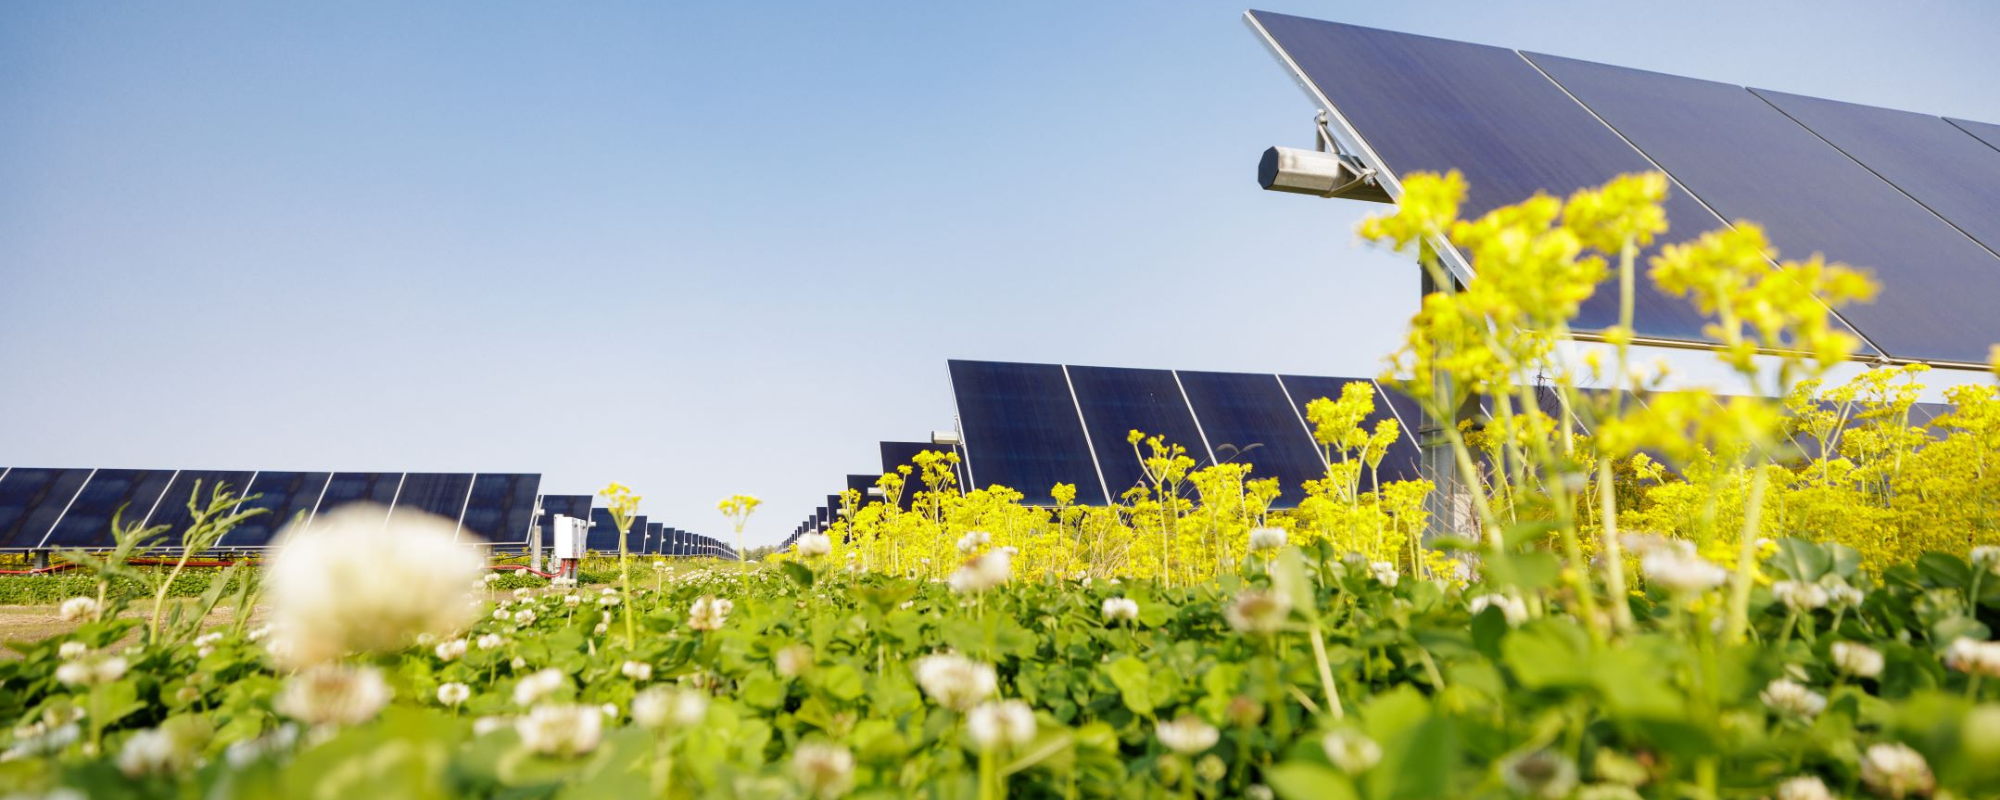 Solar panels with plants